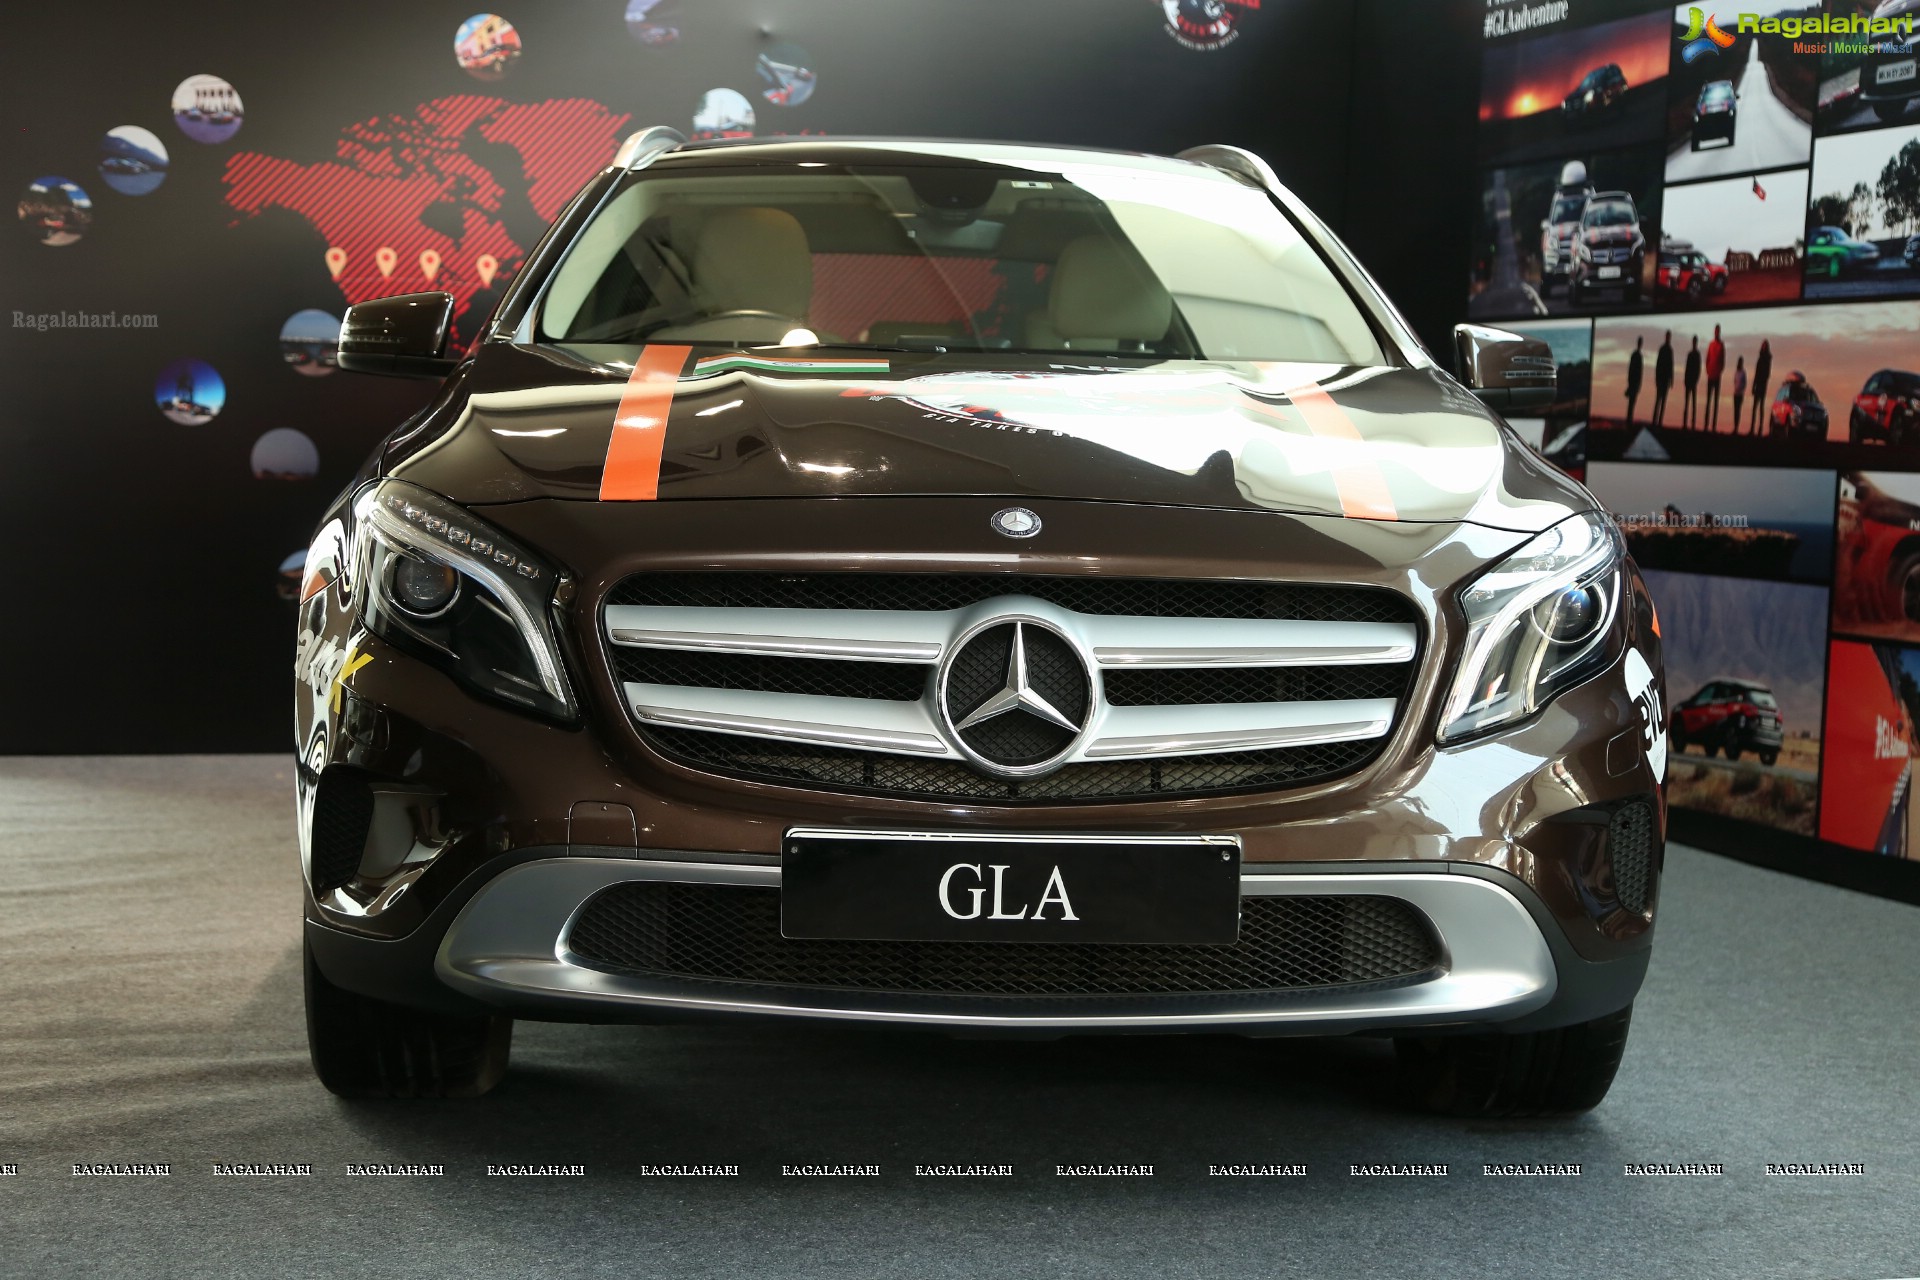 Exclusive Media Showcase of GLA Adventure Tour Vehicles at Mahavir Motors - Mercedes Benz, Kavuri Hills, Hyderabad